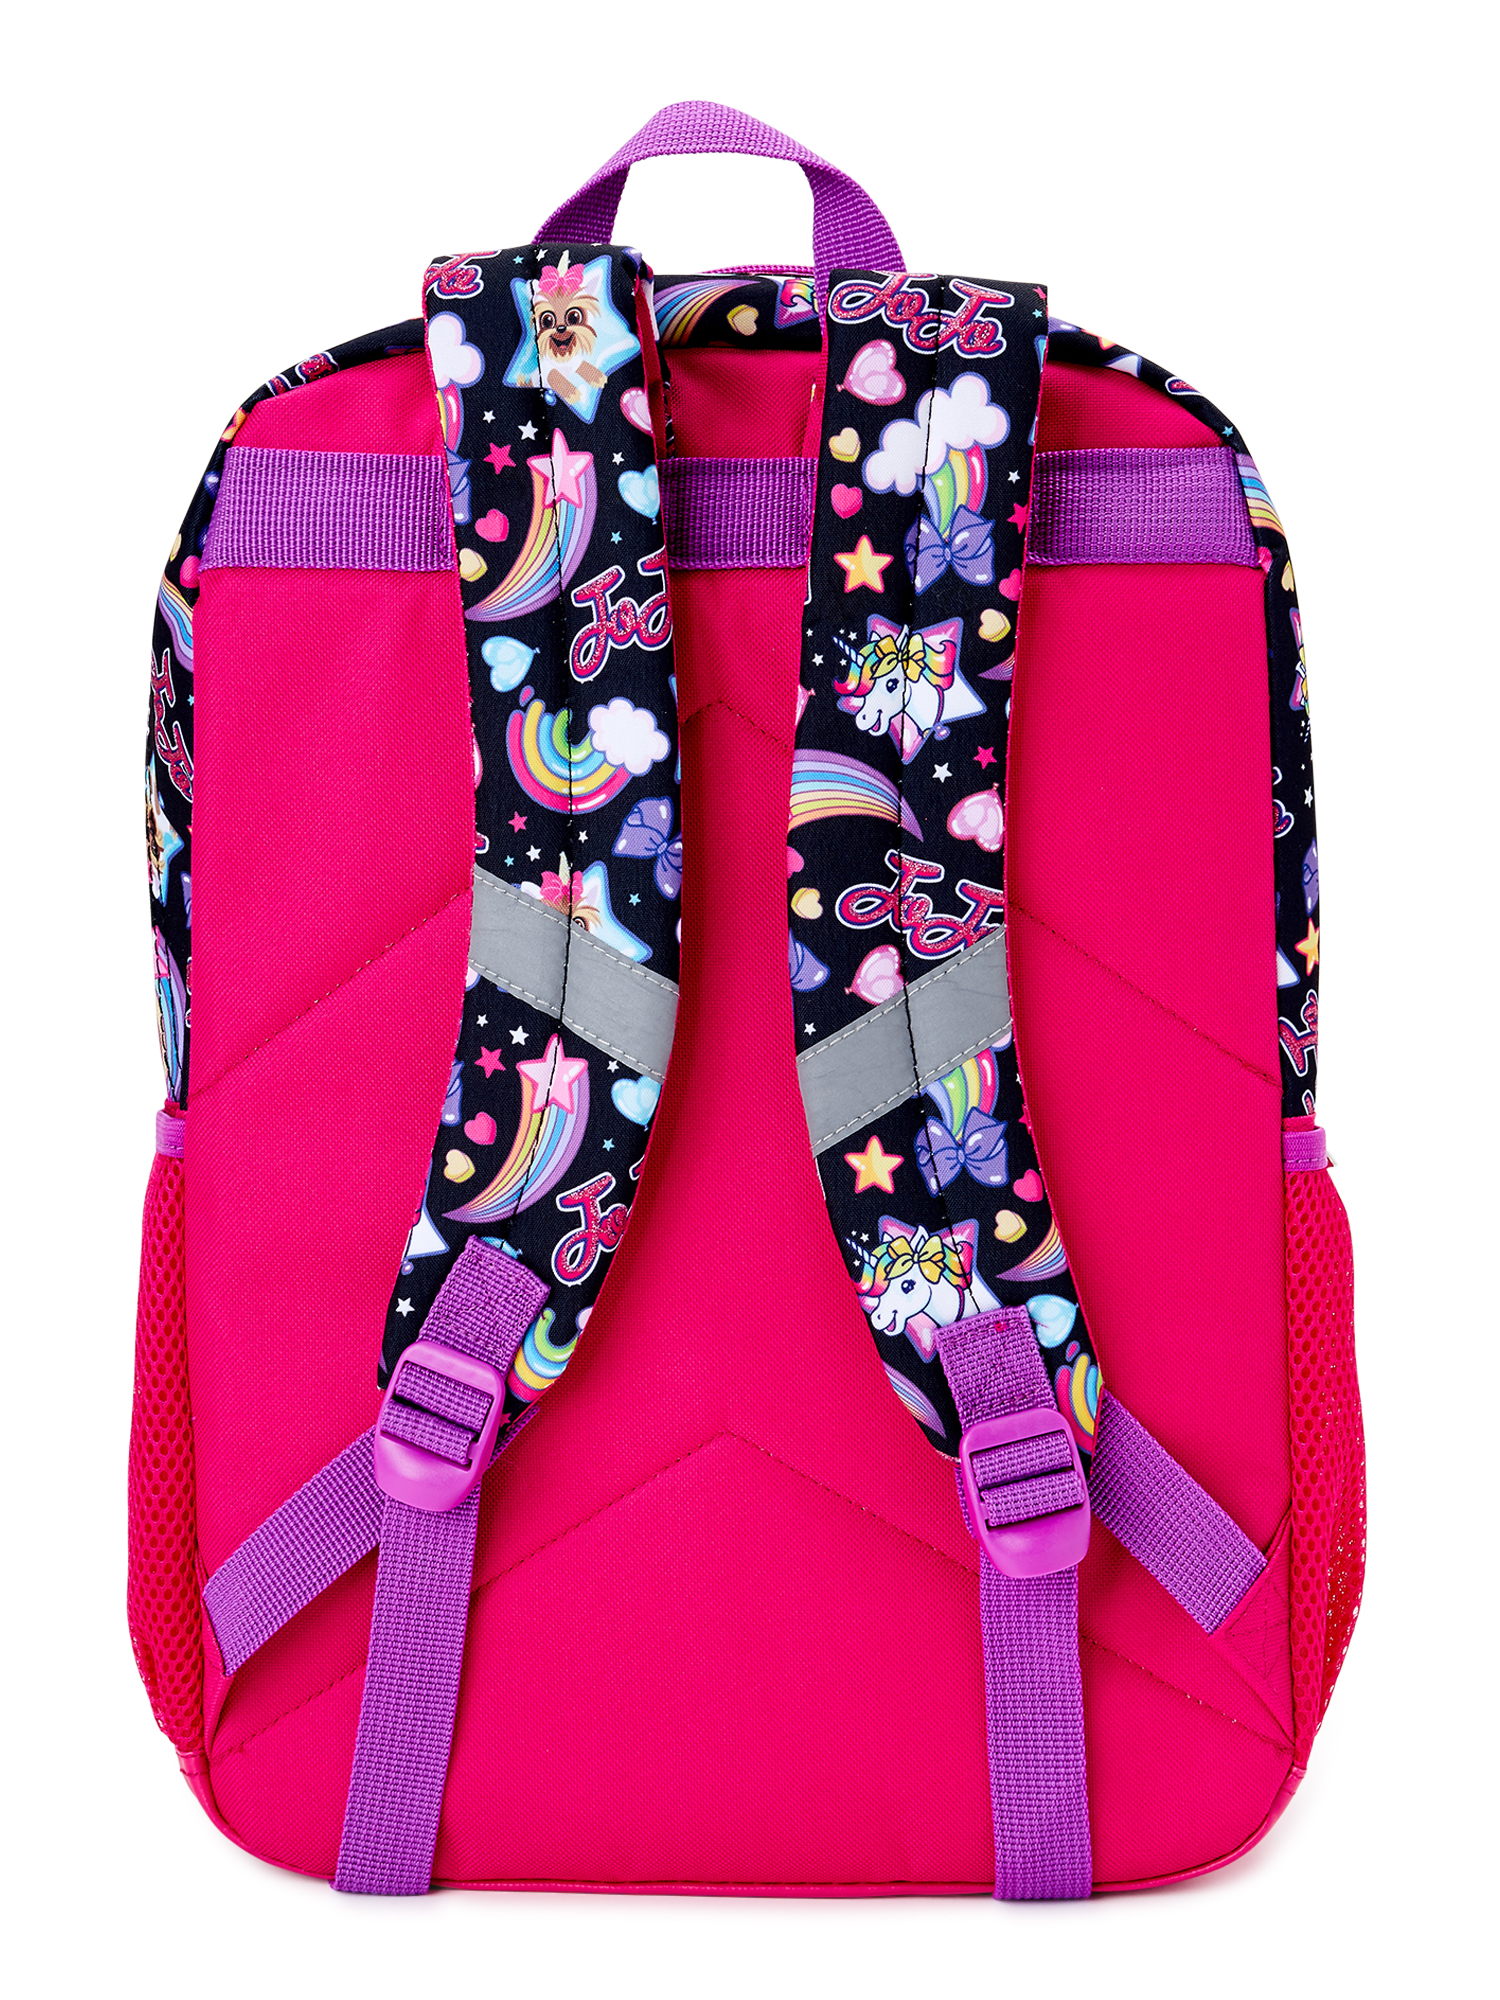 Nickelodeon Jojo Siwa Follow Your Dream Girls' Backpack - image 2 of 5